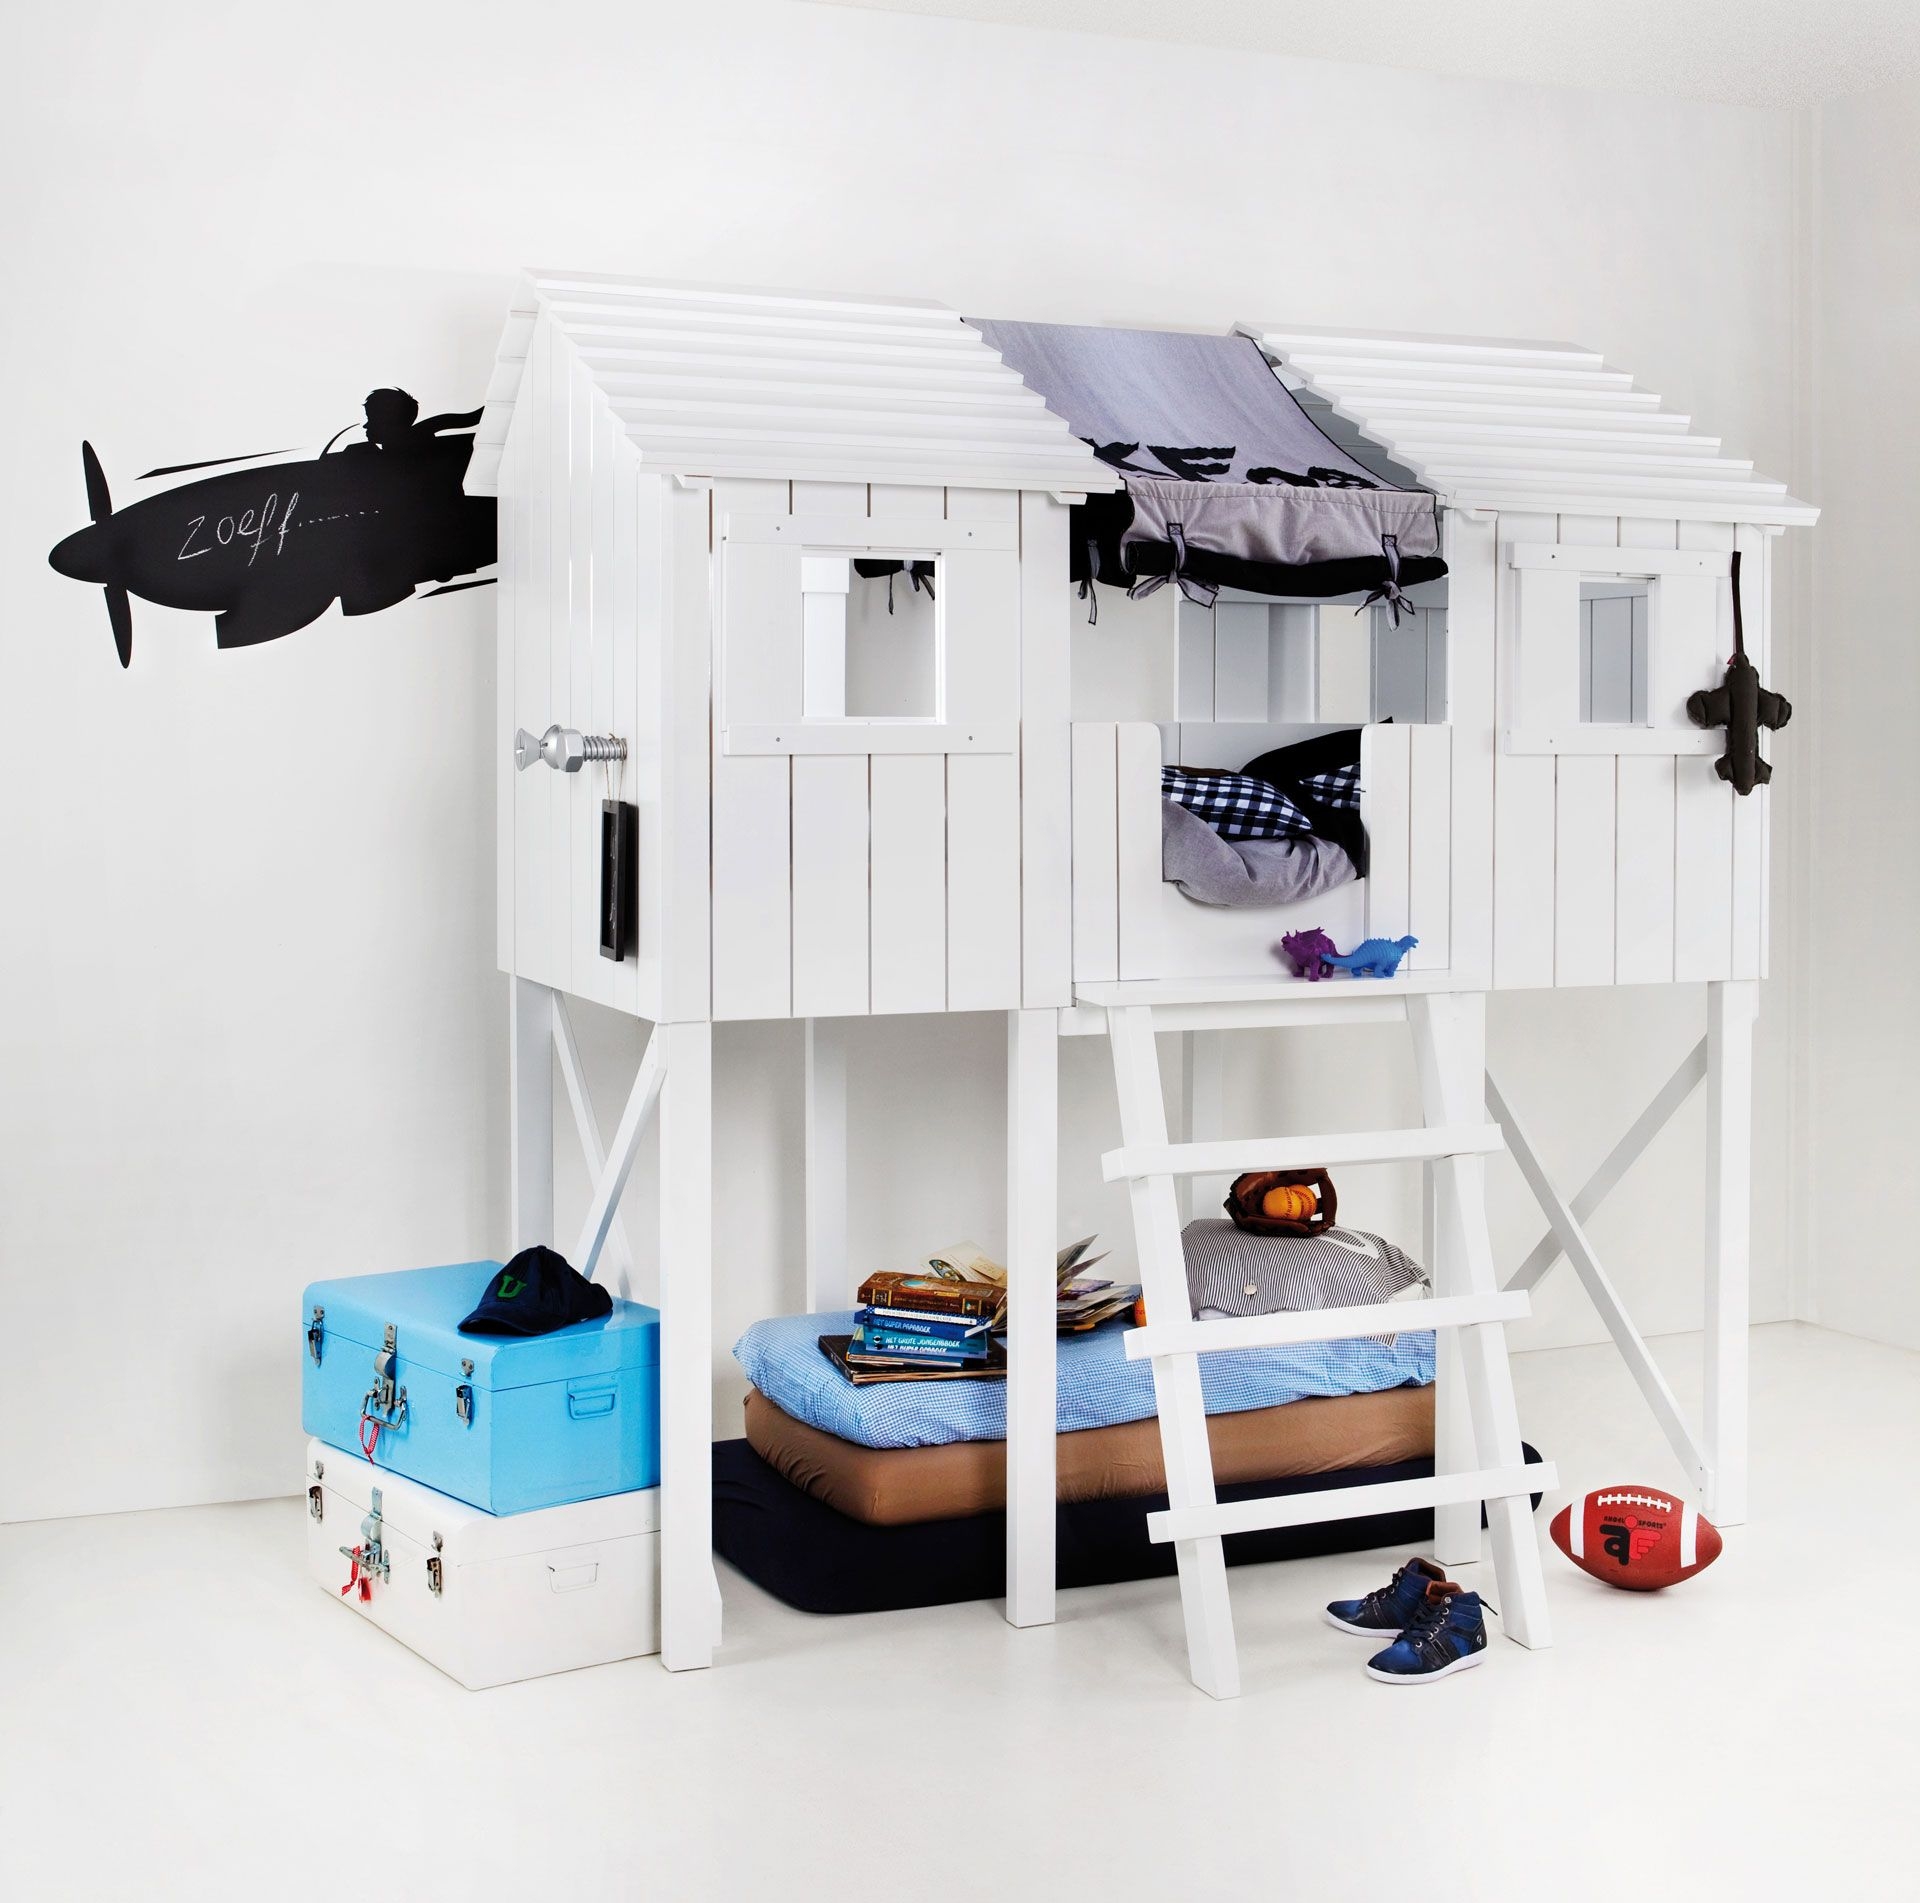 Tradewins doll house loft bunk bed